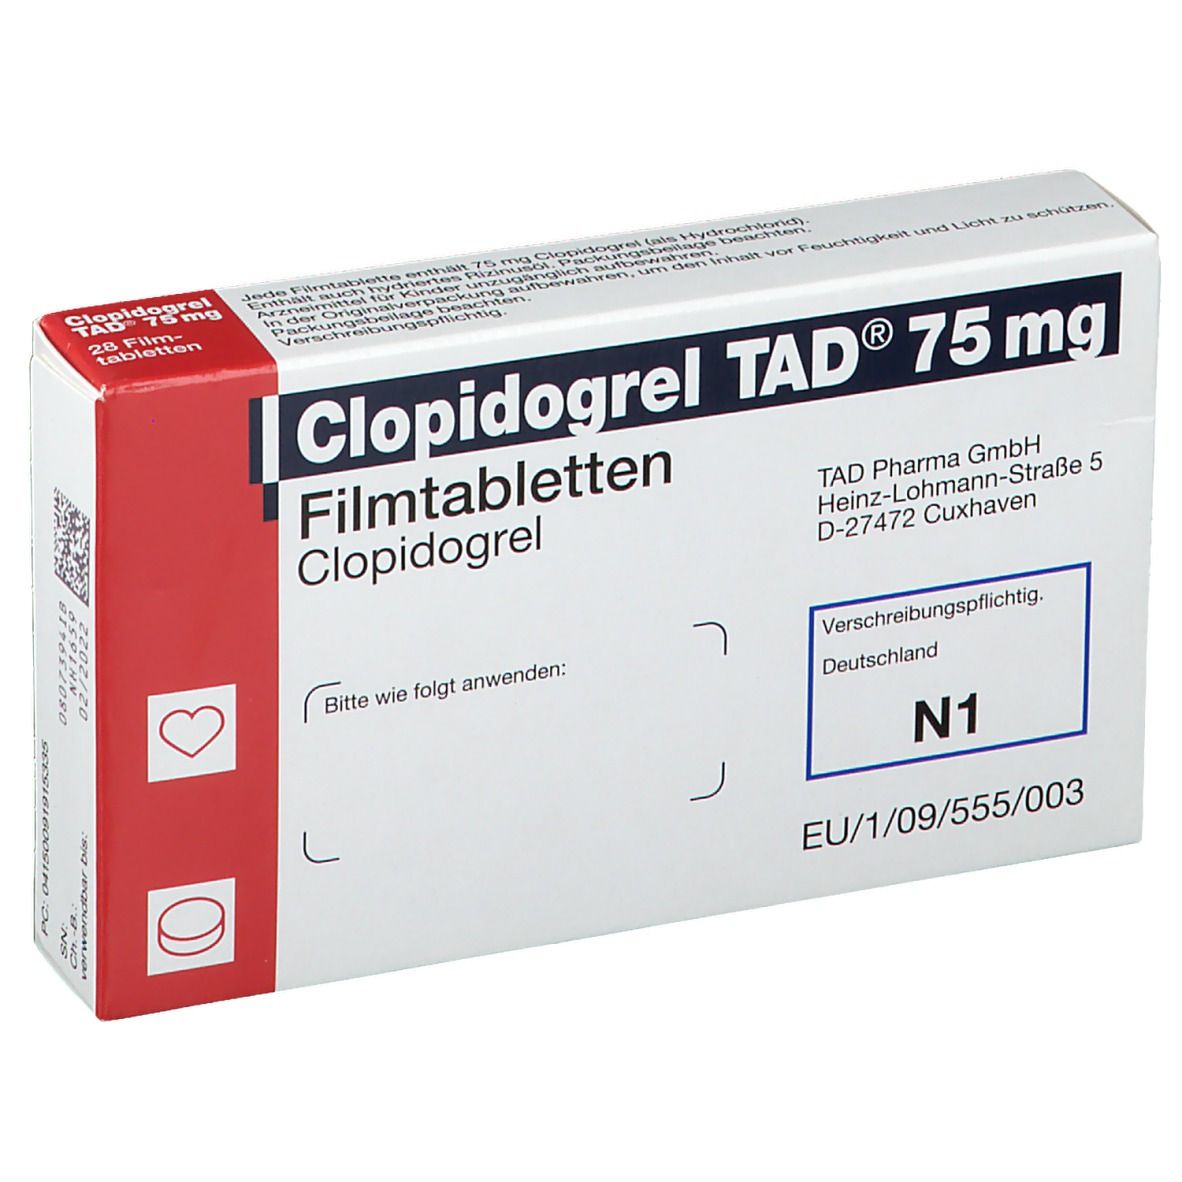 Clopidogrel TAD® 75 mg